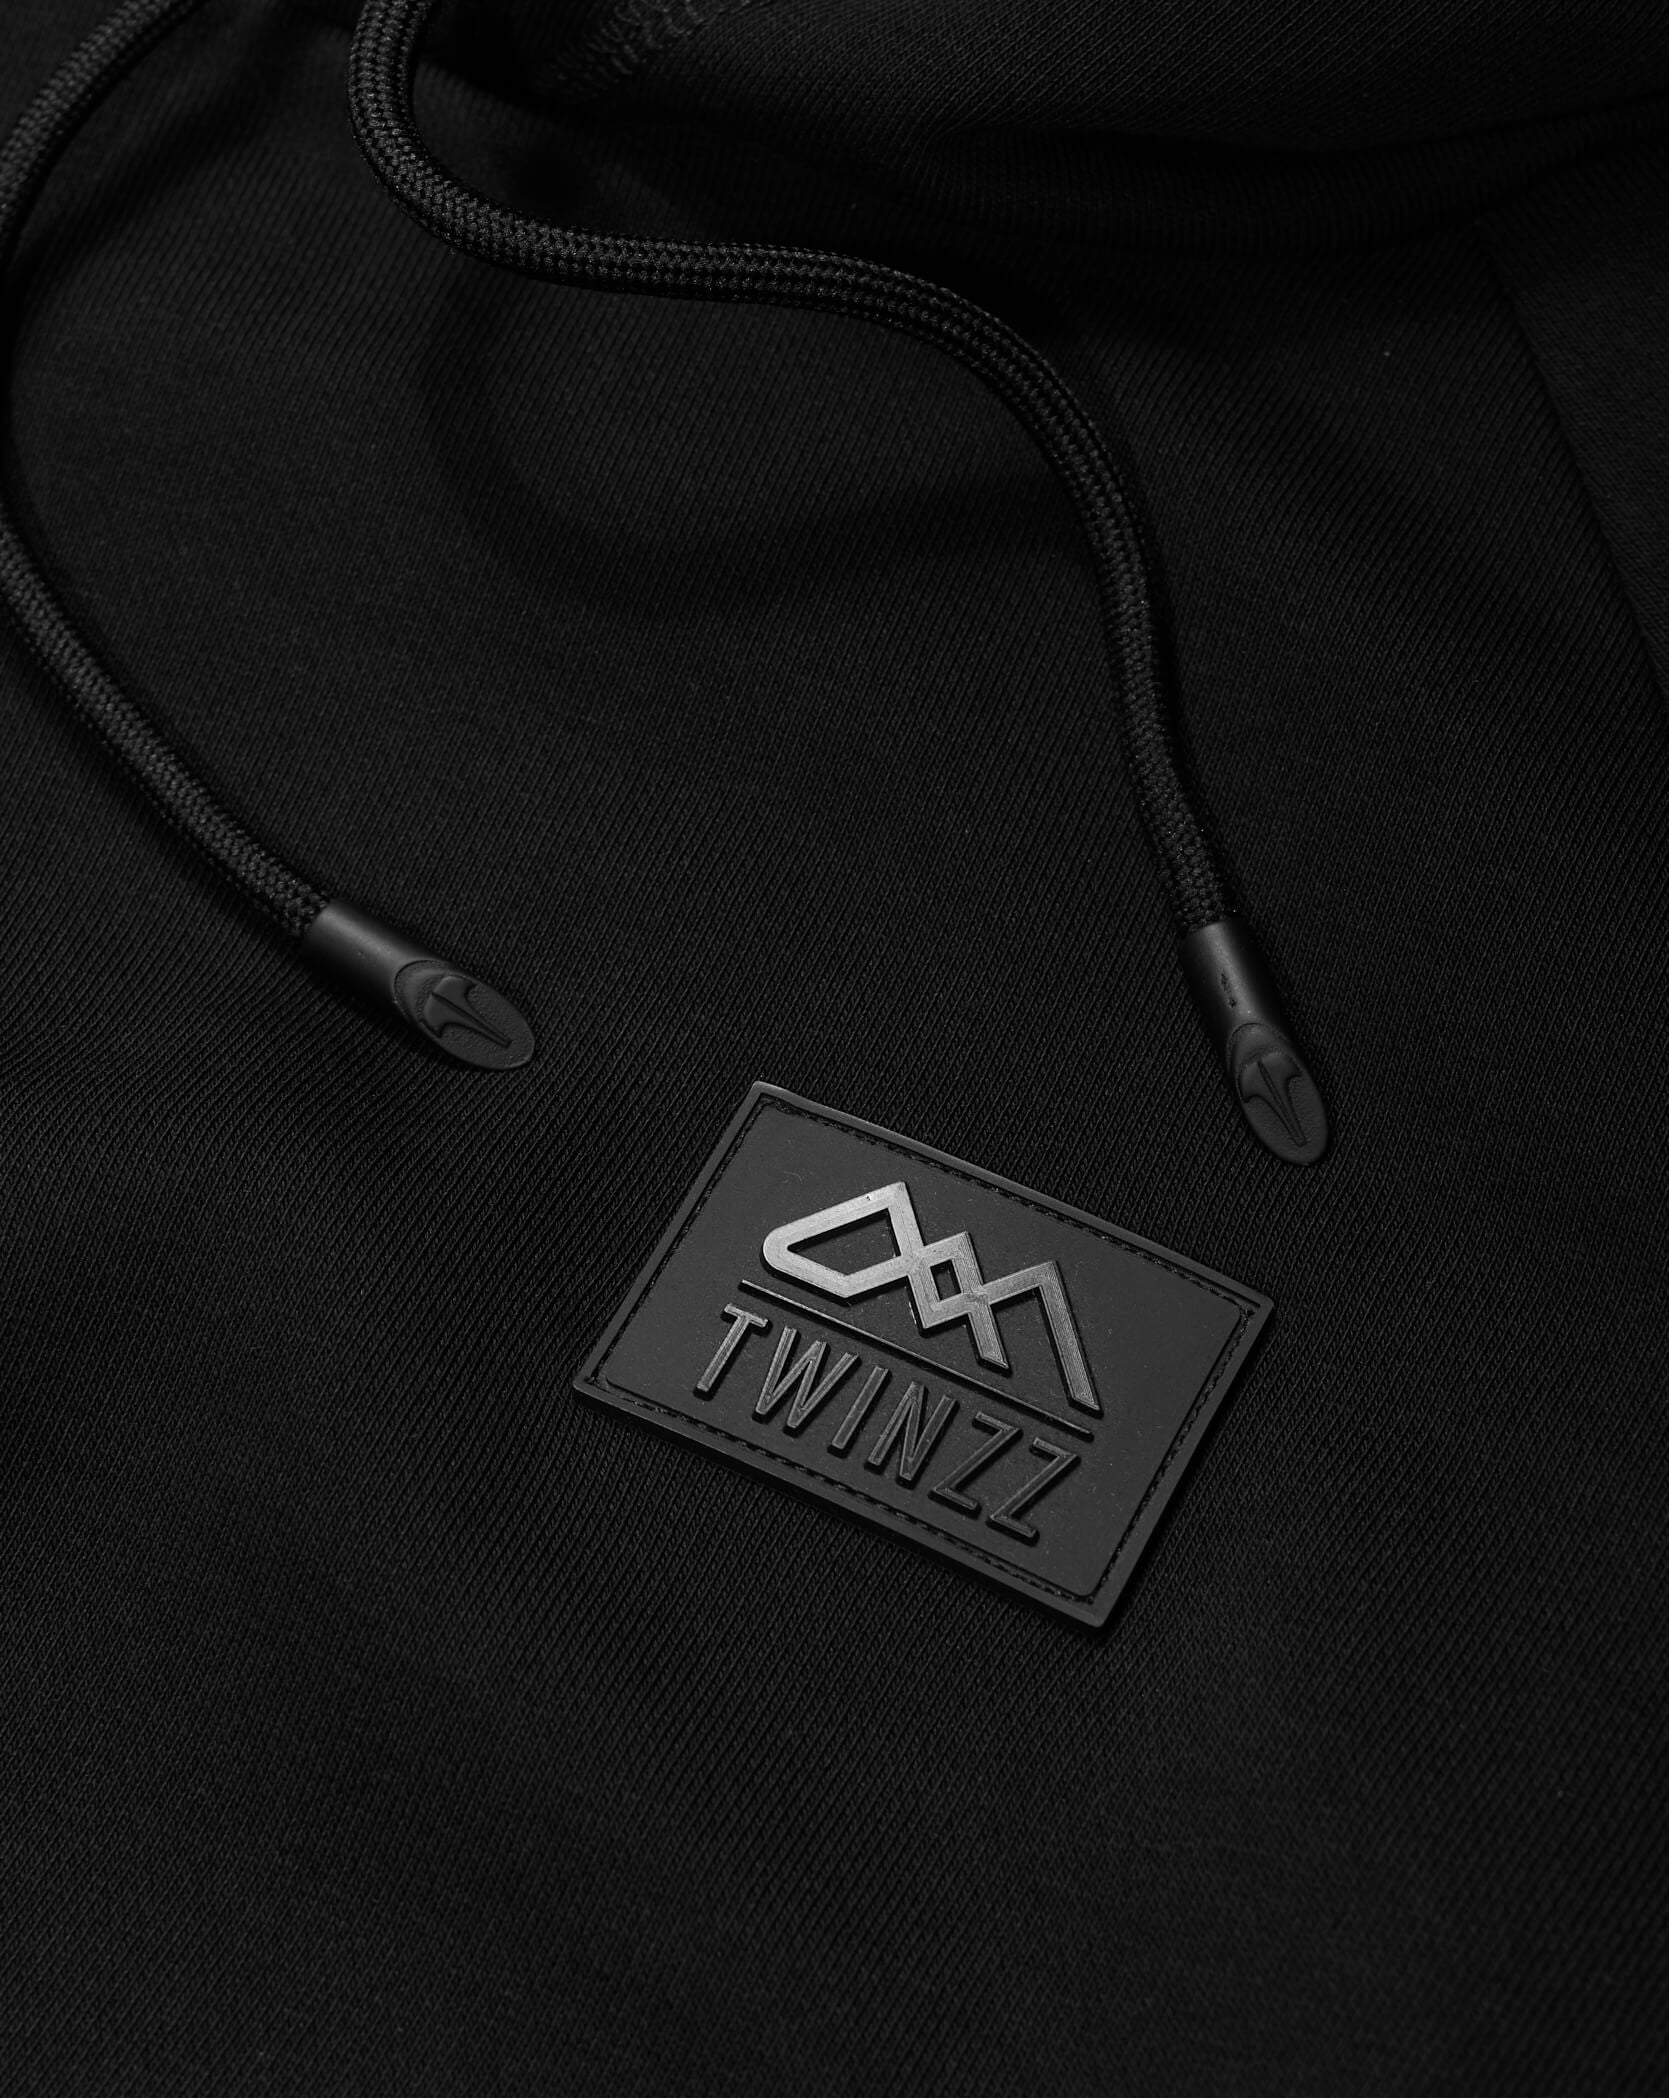 Twinzz black lifestyle hoodie logo